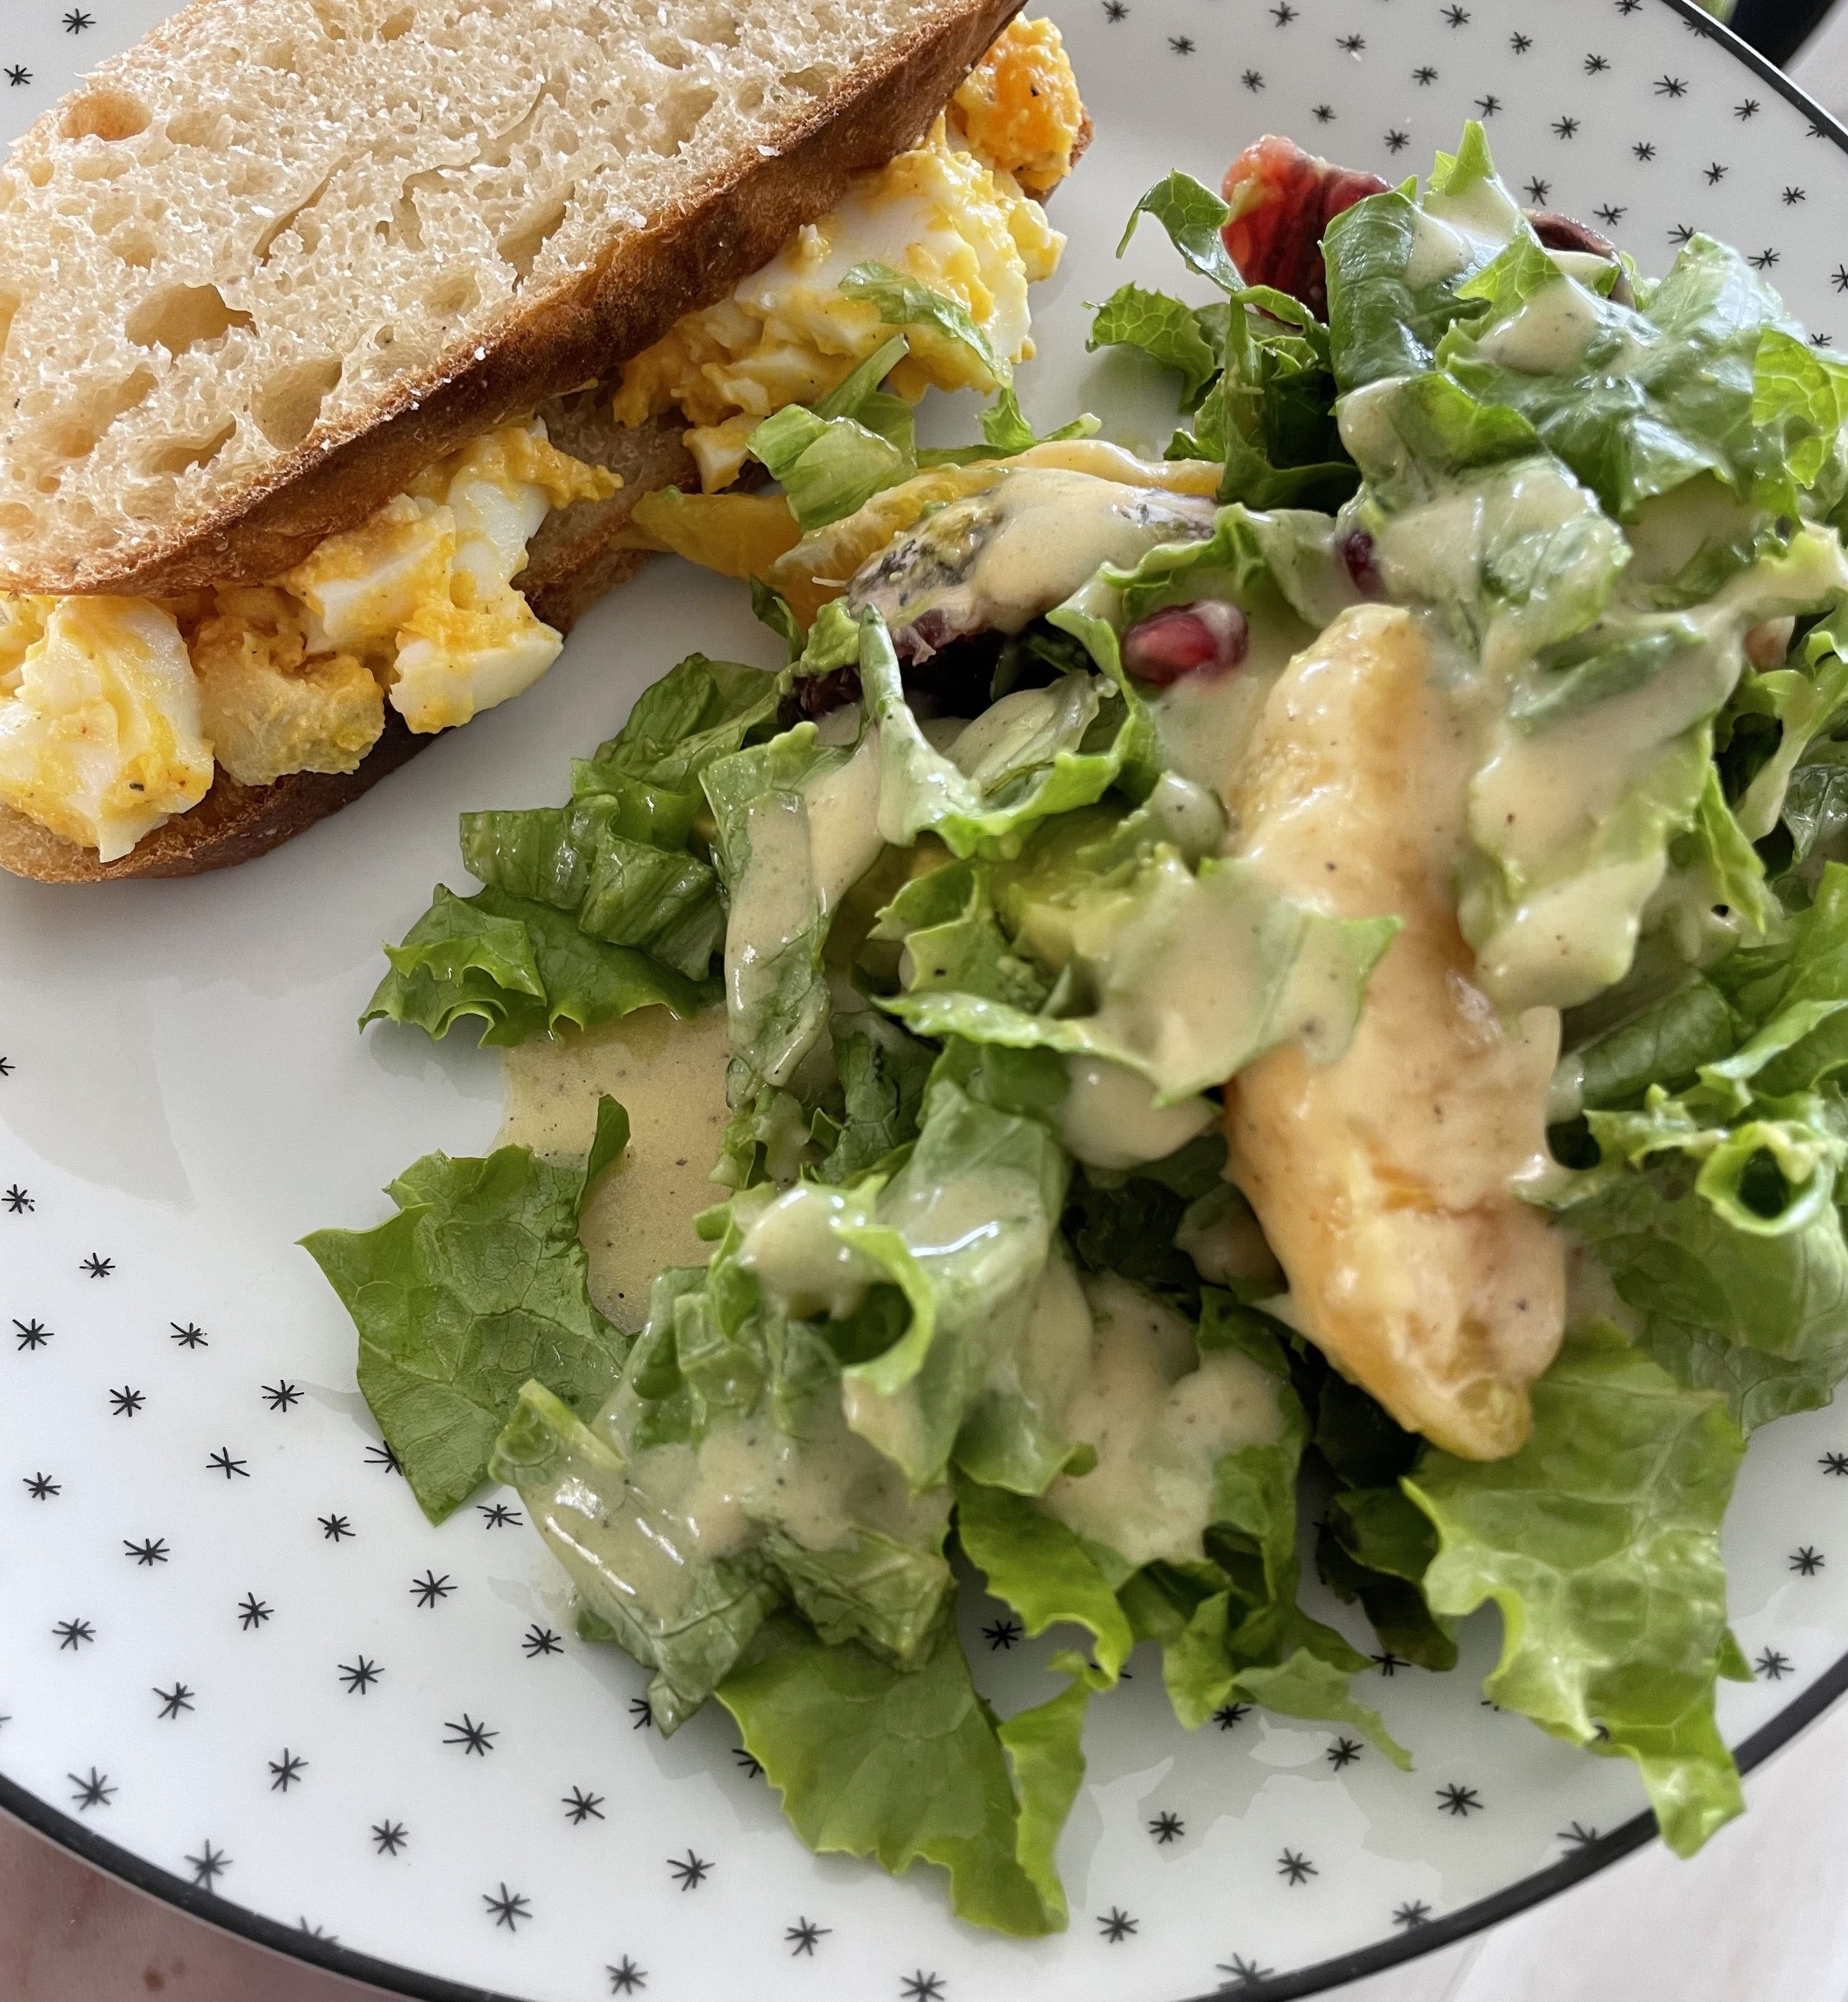 egg salad sandwich and salad on a plate